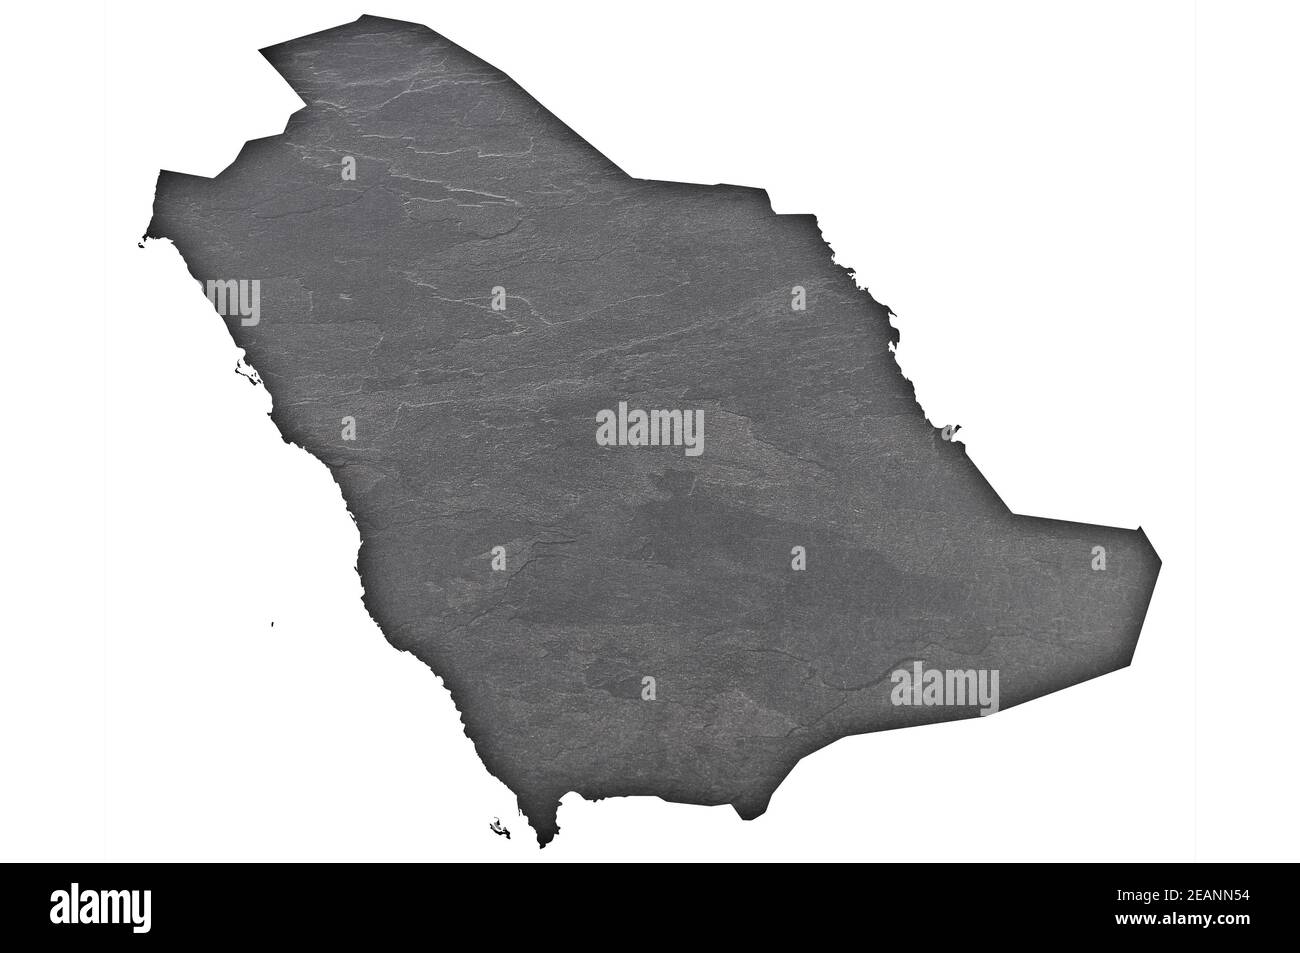 Map of Saudi Arabia on dark slate Stock Photo